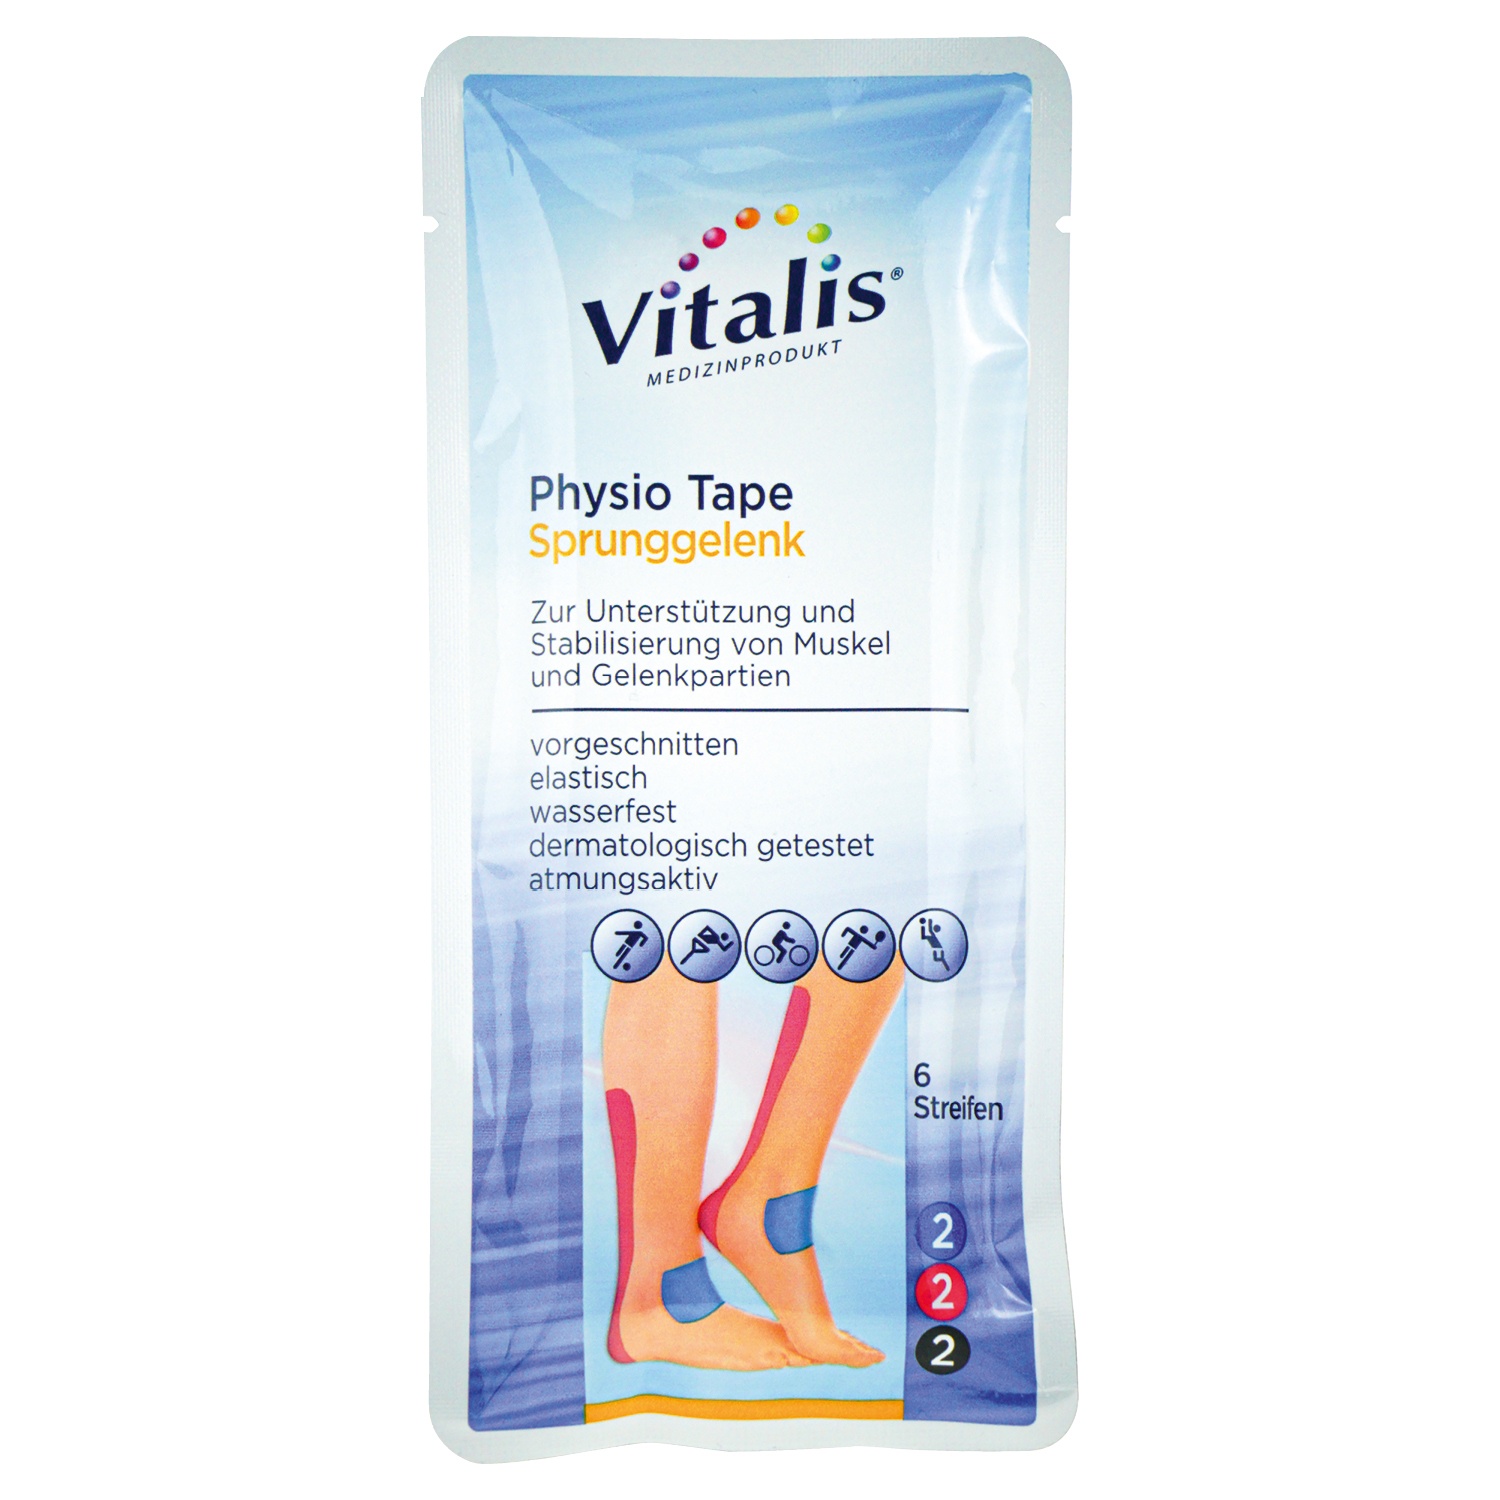 Vitalis® Physio Tape